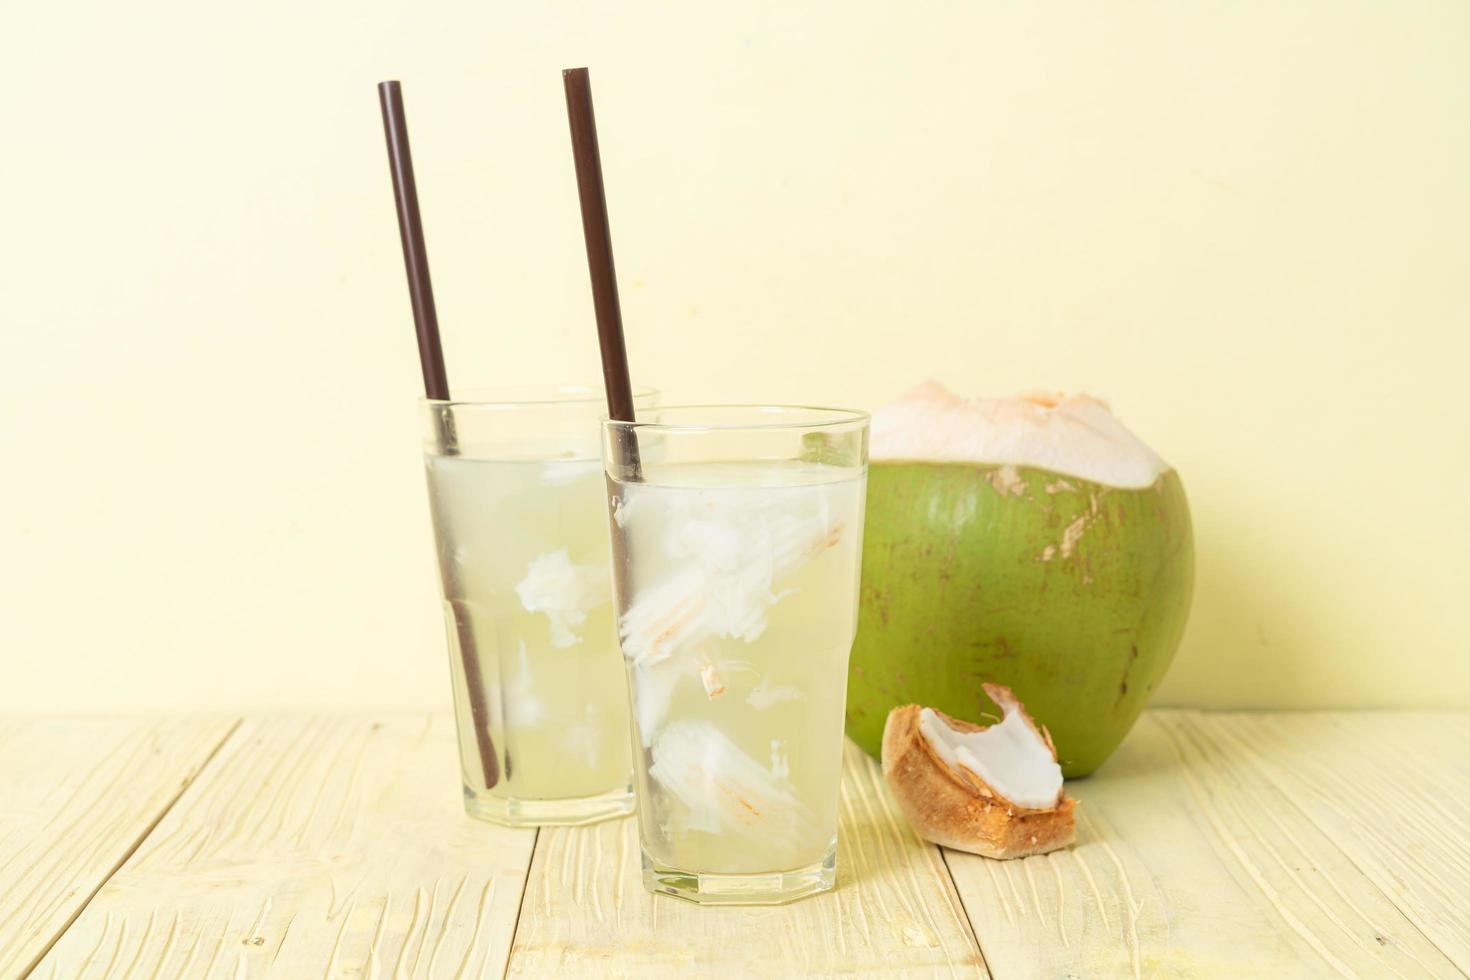 coconut water or coconut juice photo